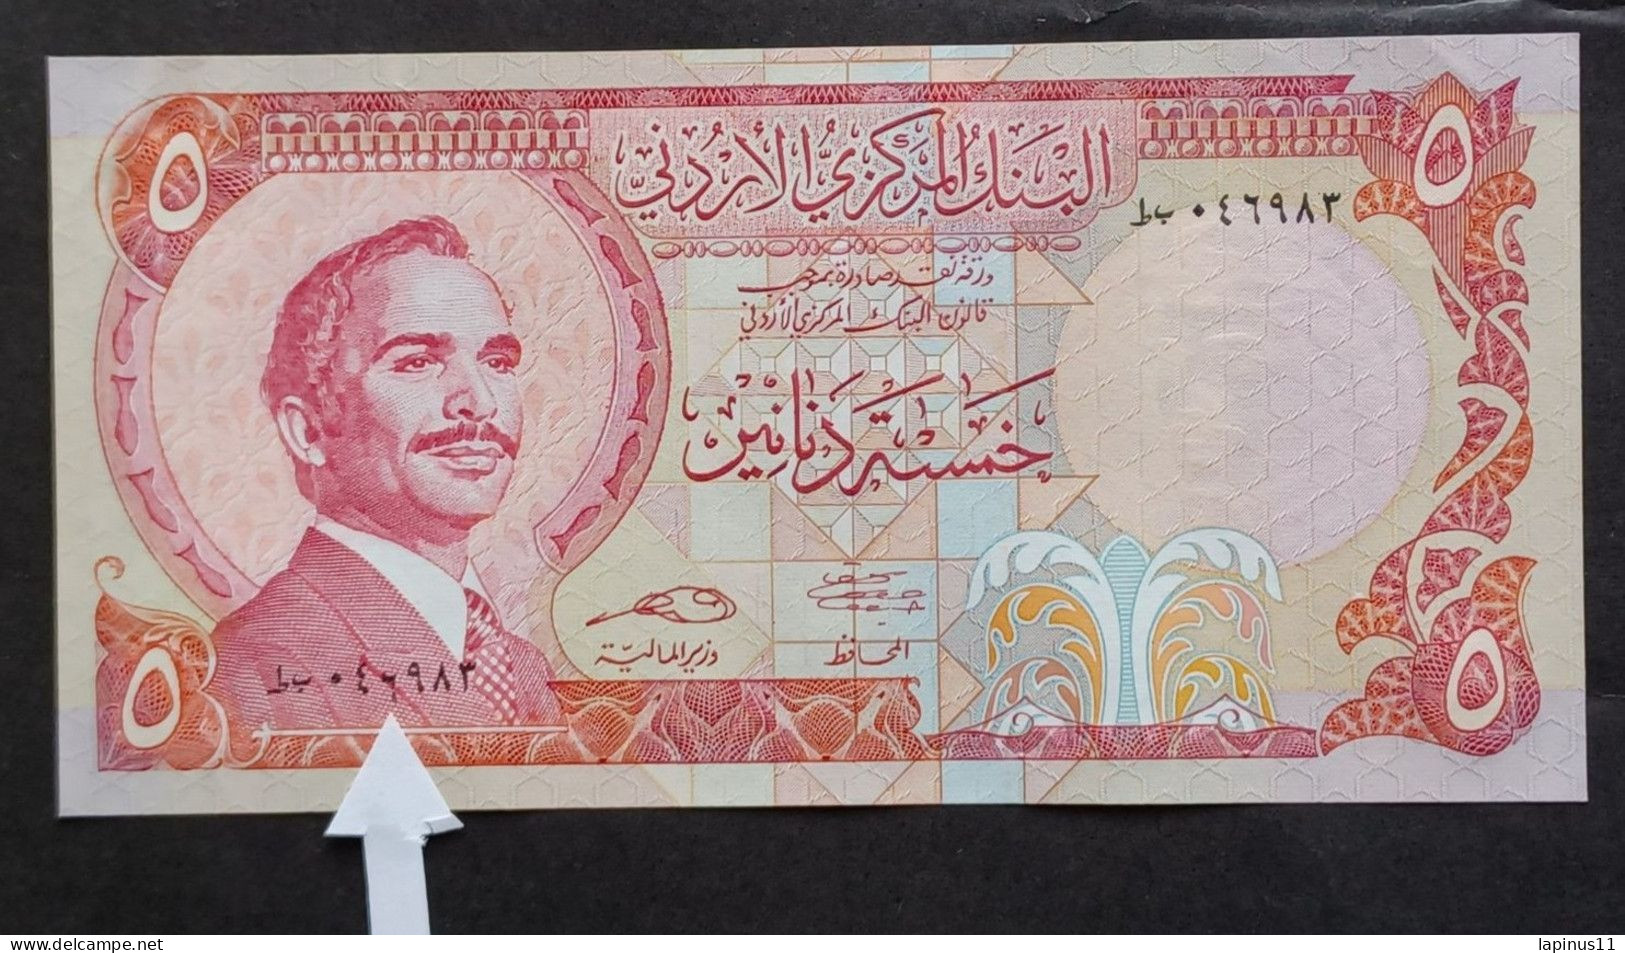 BANKNOTE الأردن JORDAN GIORDANIA 5 DINARS KING HUSSEIN 1975 ERROR PRINT NUMBER 6 LOW UNC 8 PIECES SYRIAL NUMBER - Jordan